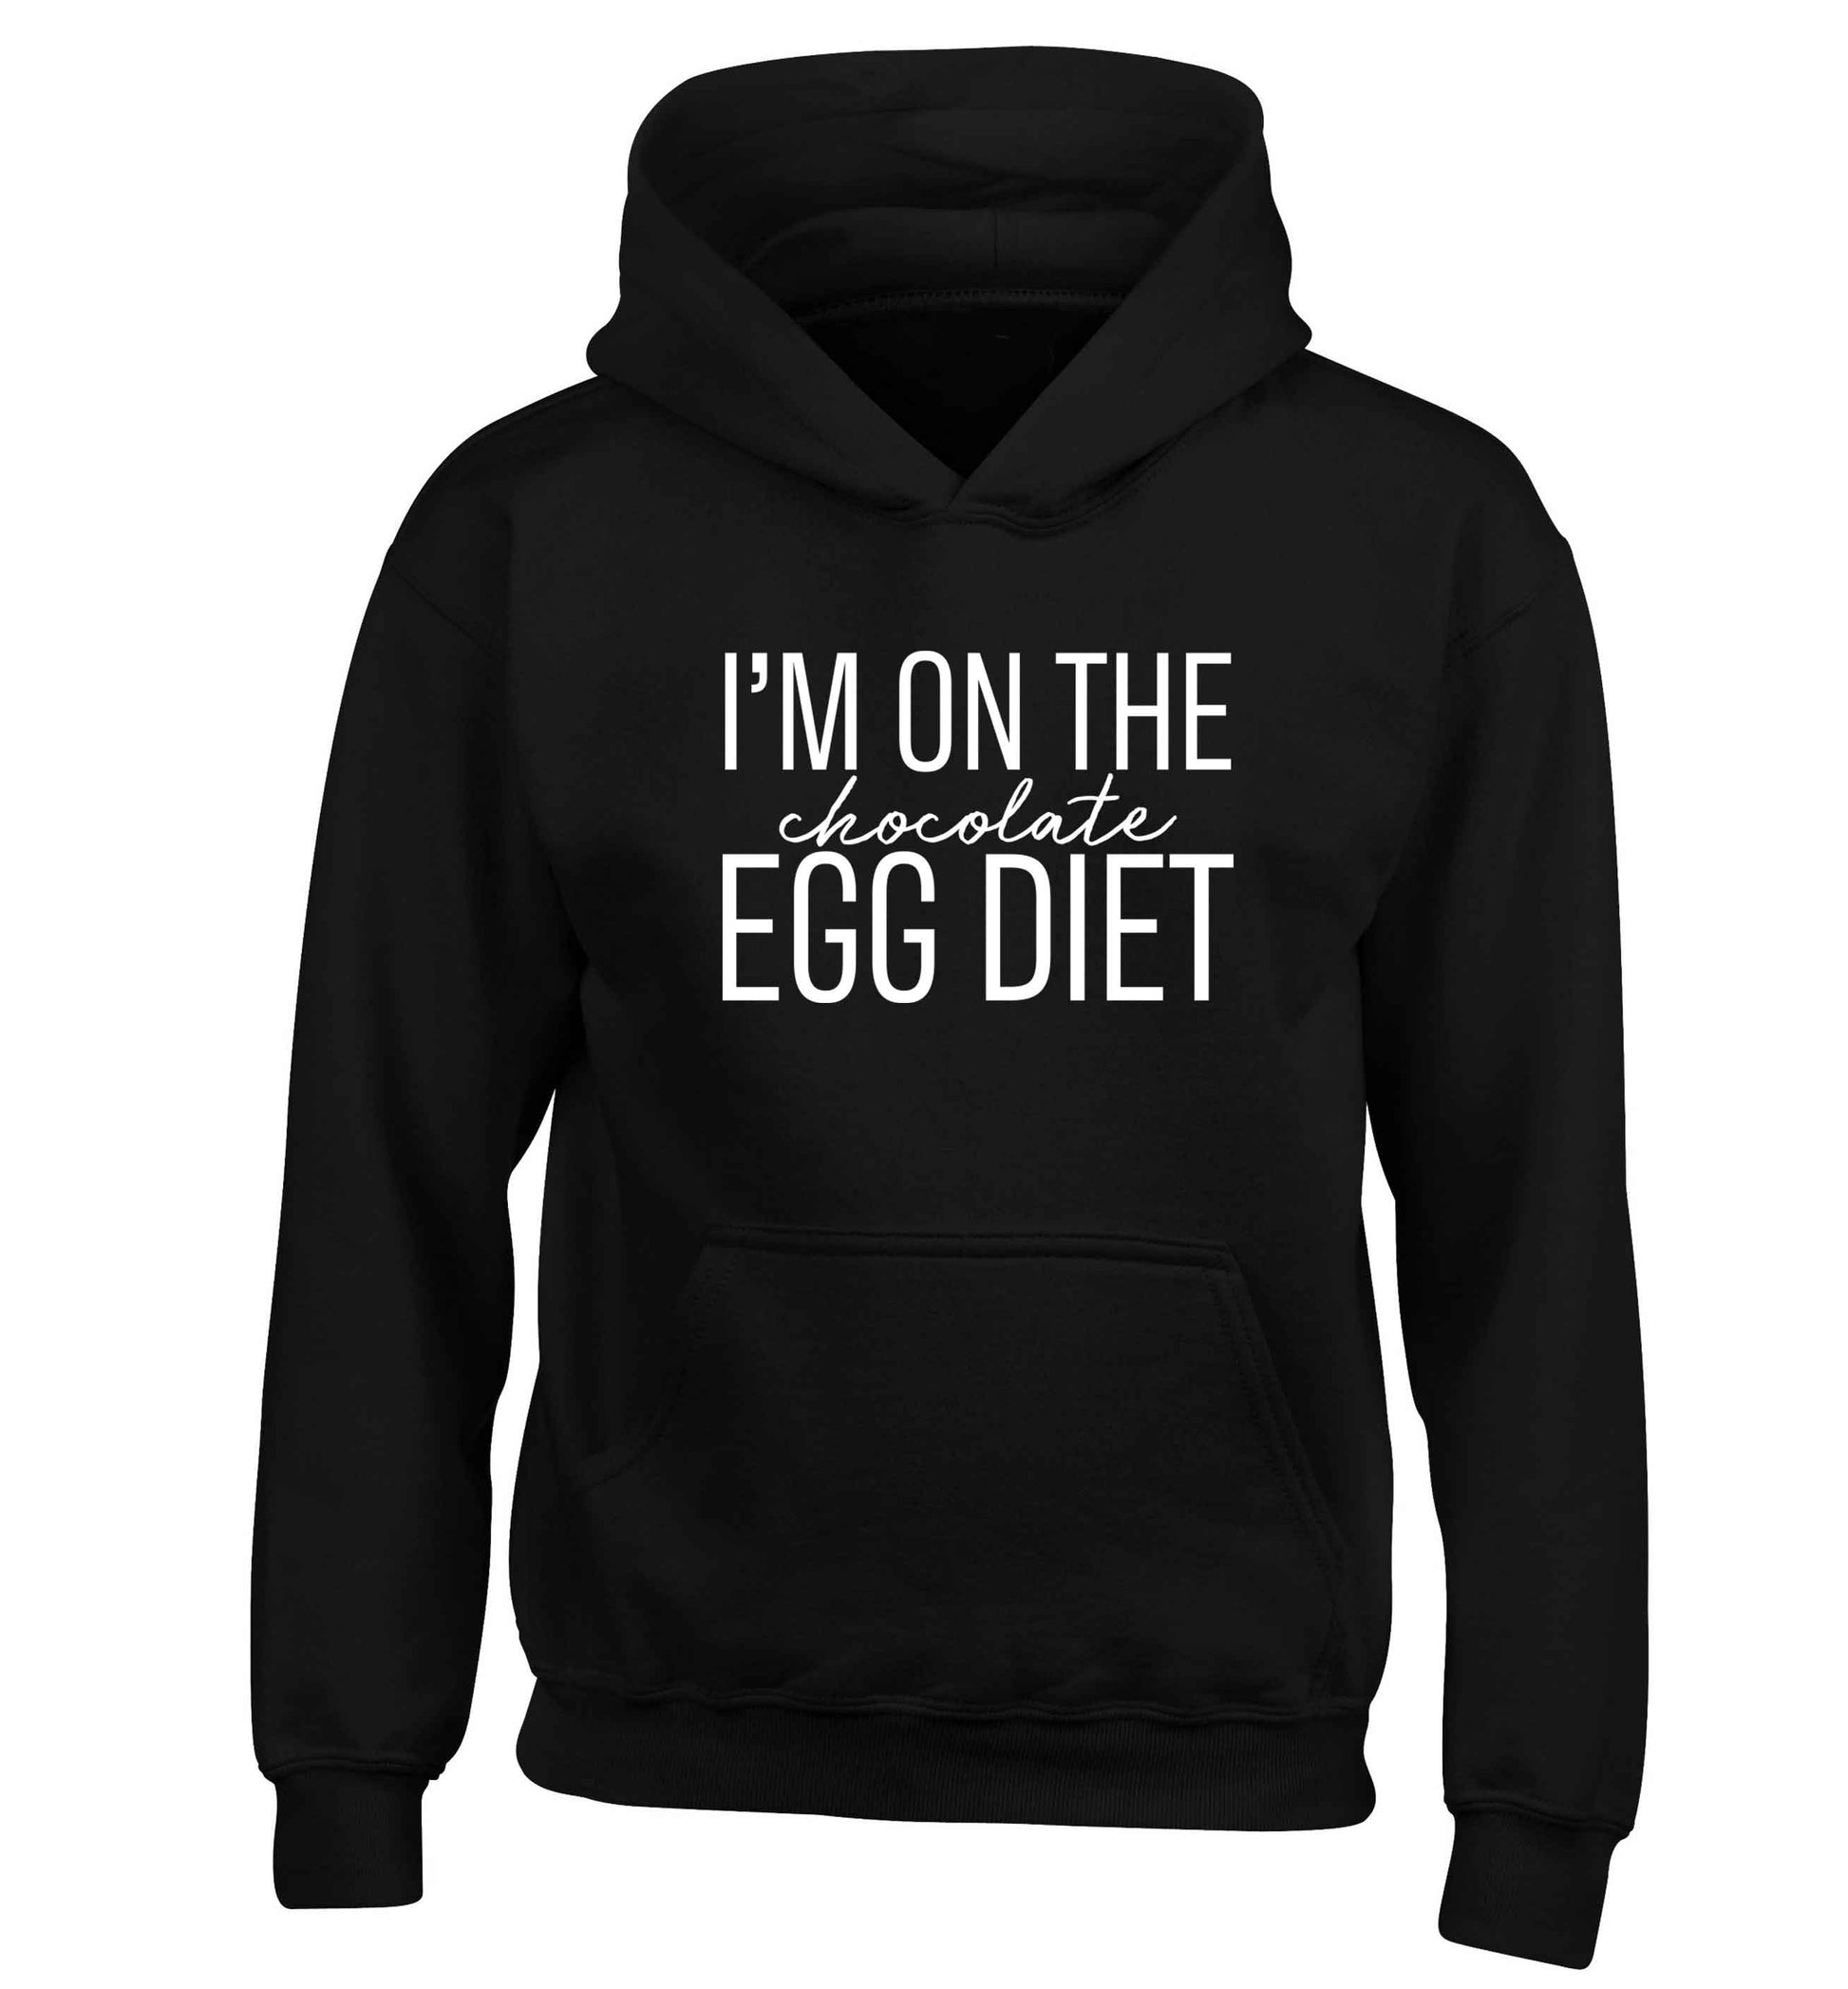 I'm on the chocolate egg diet children's black hoodie 12-13 Years